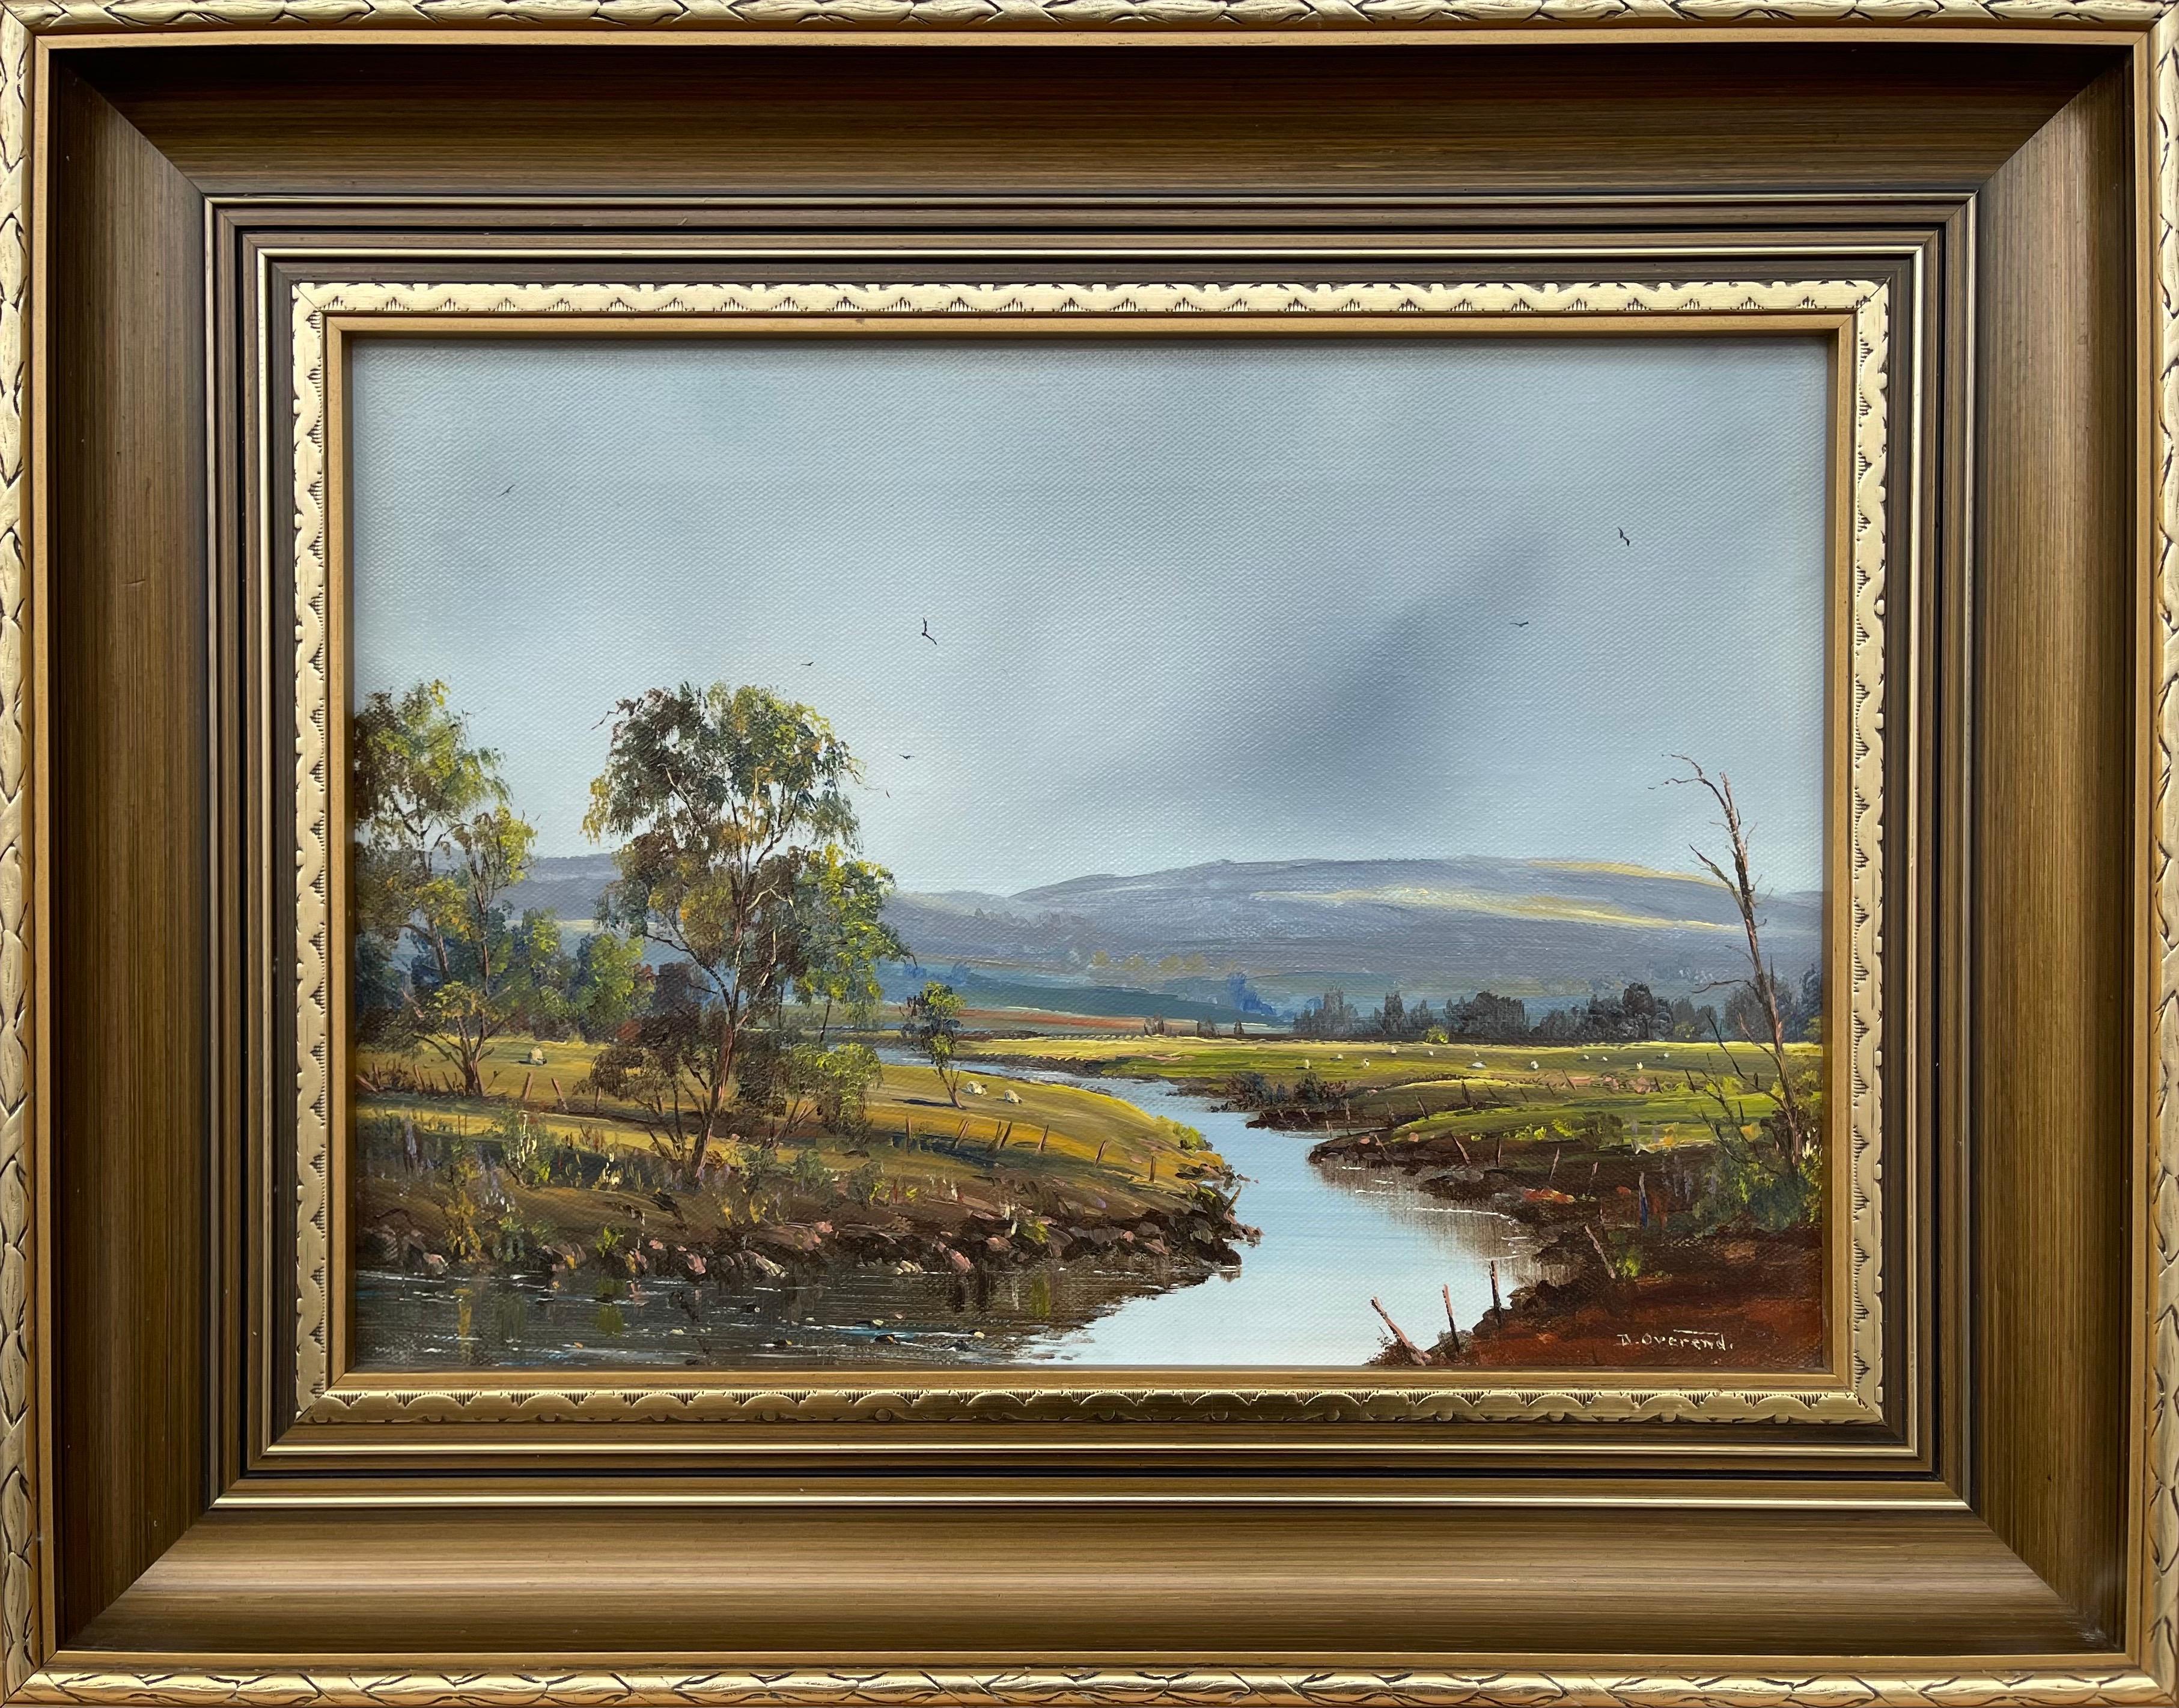 David Overend Landscape Painting - Northern Ireland River Landscape Oil Painting by Post War Modern Irish Artist 